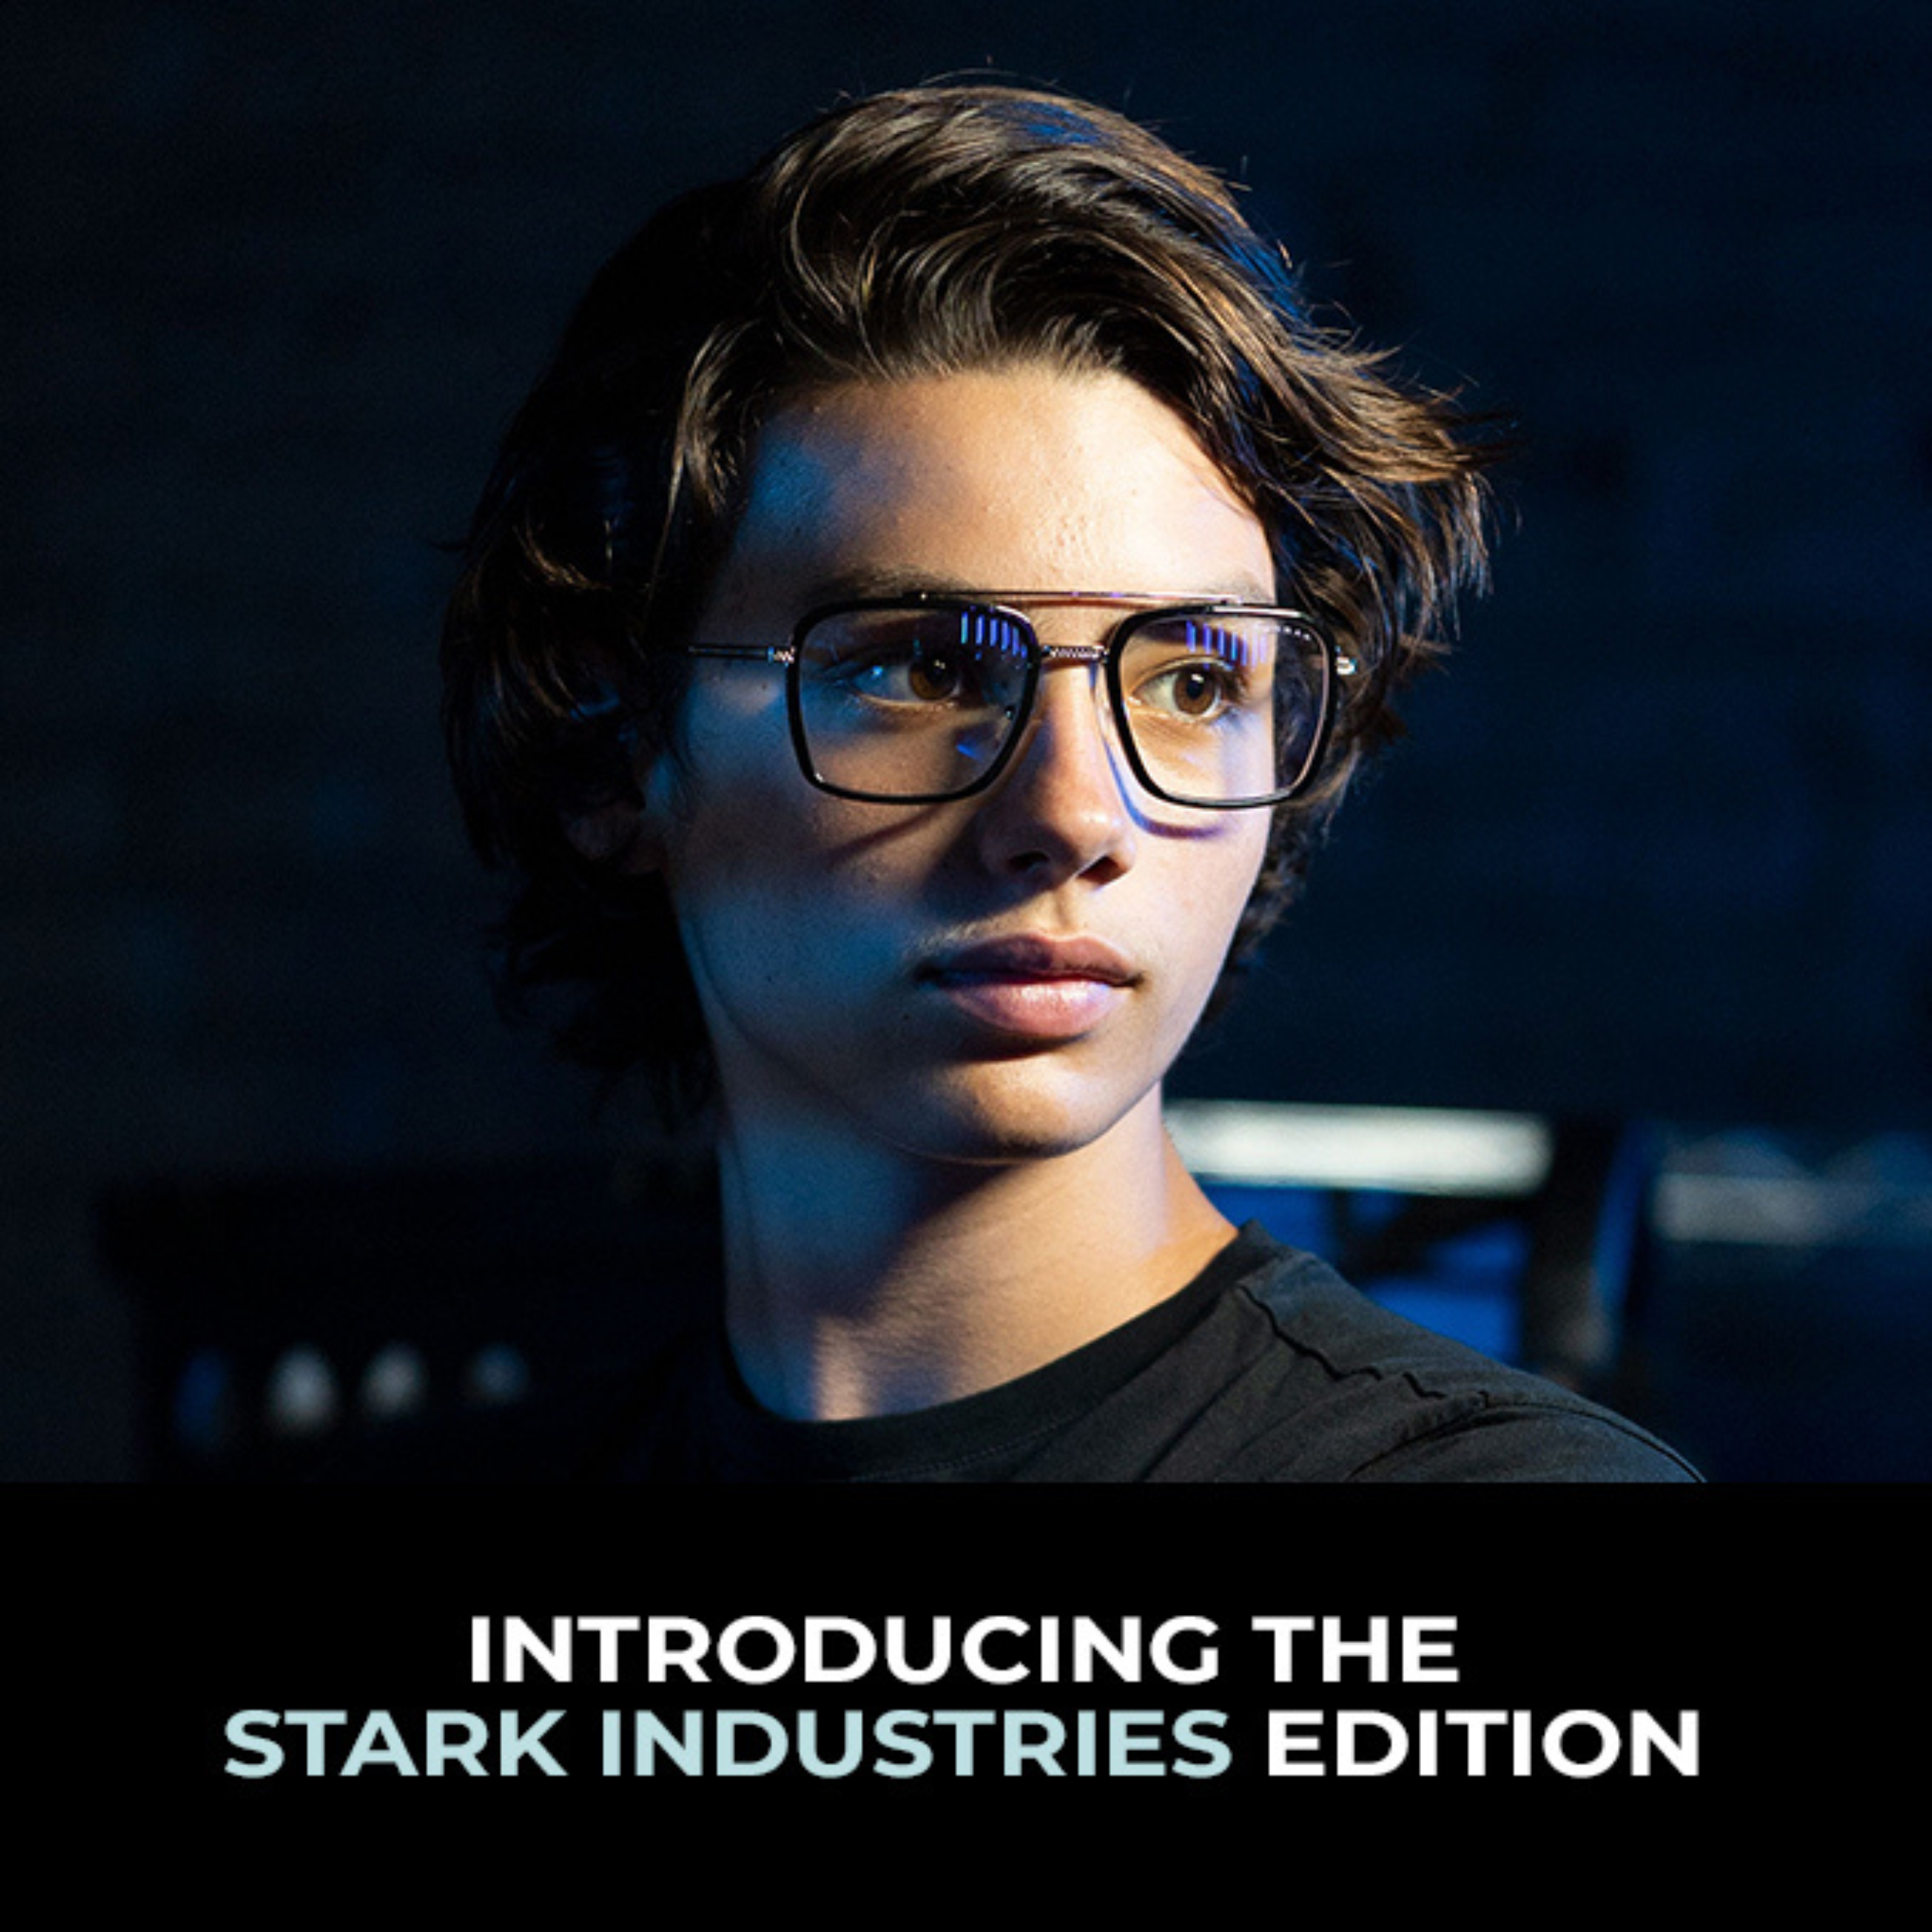 GUNNAR Stark Industries Edition, Clear Brille Tint, Gaming